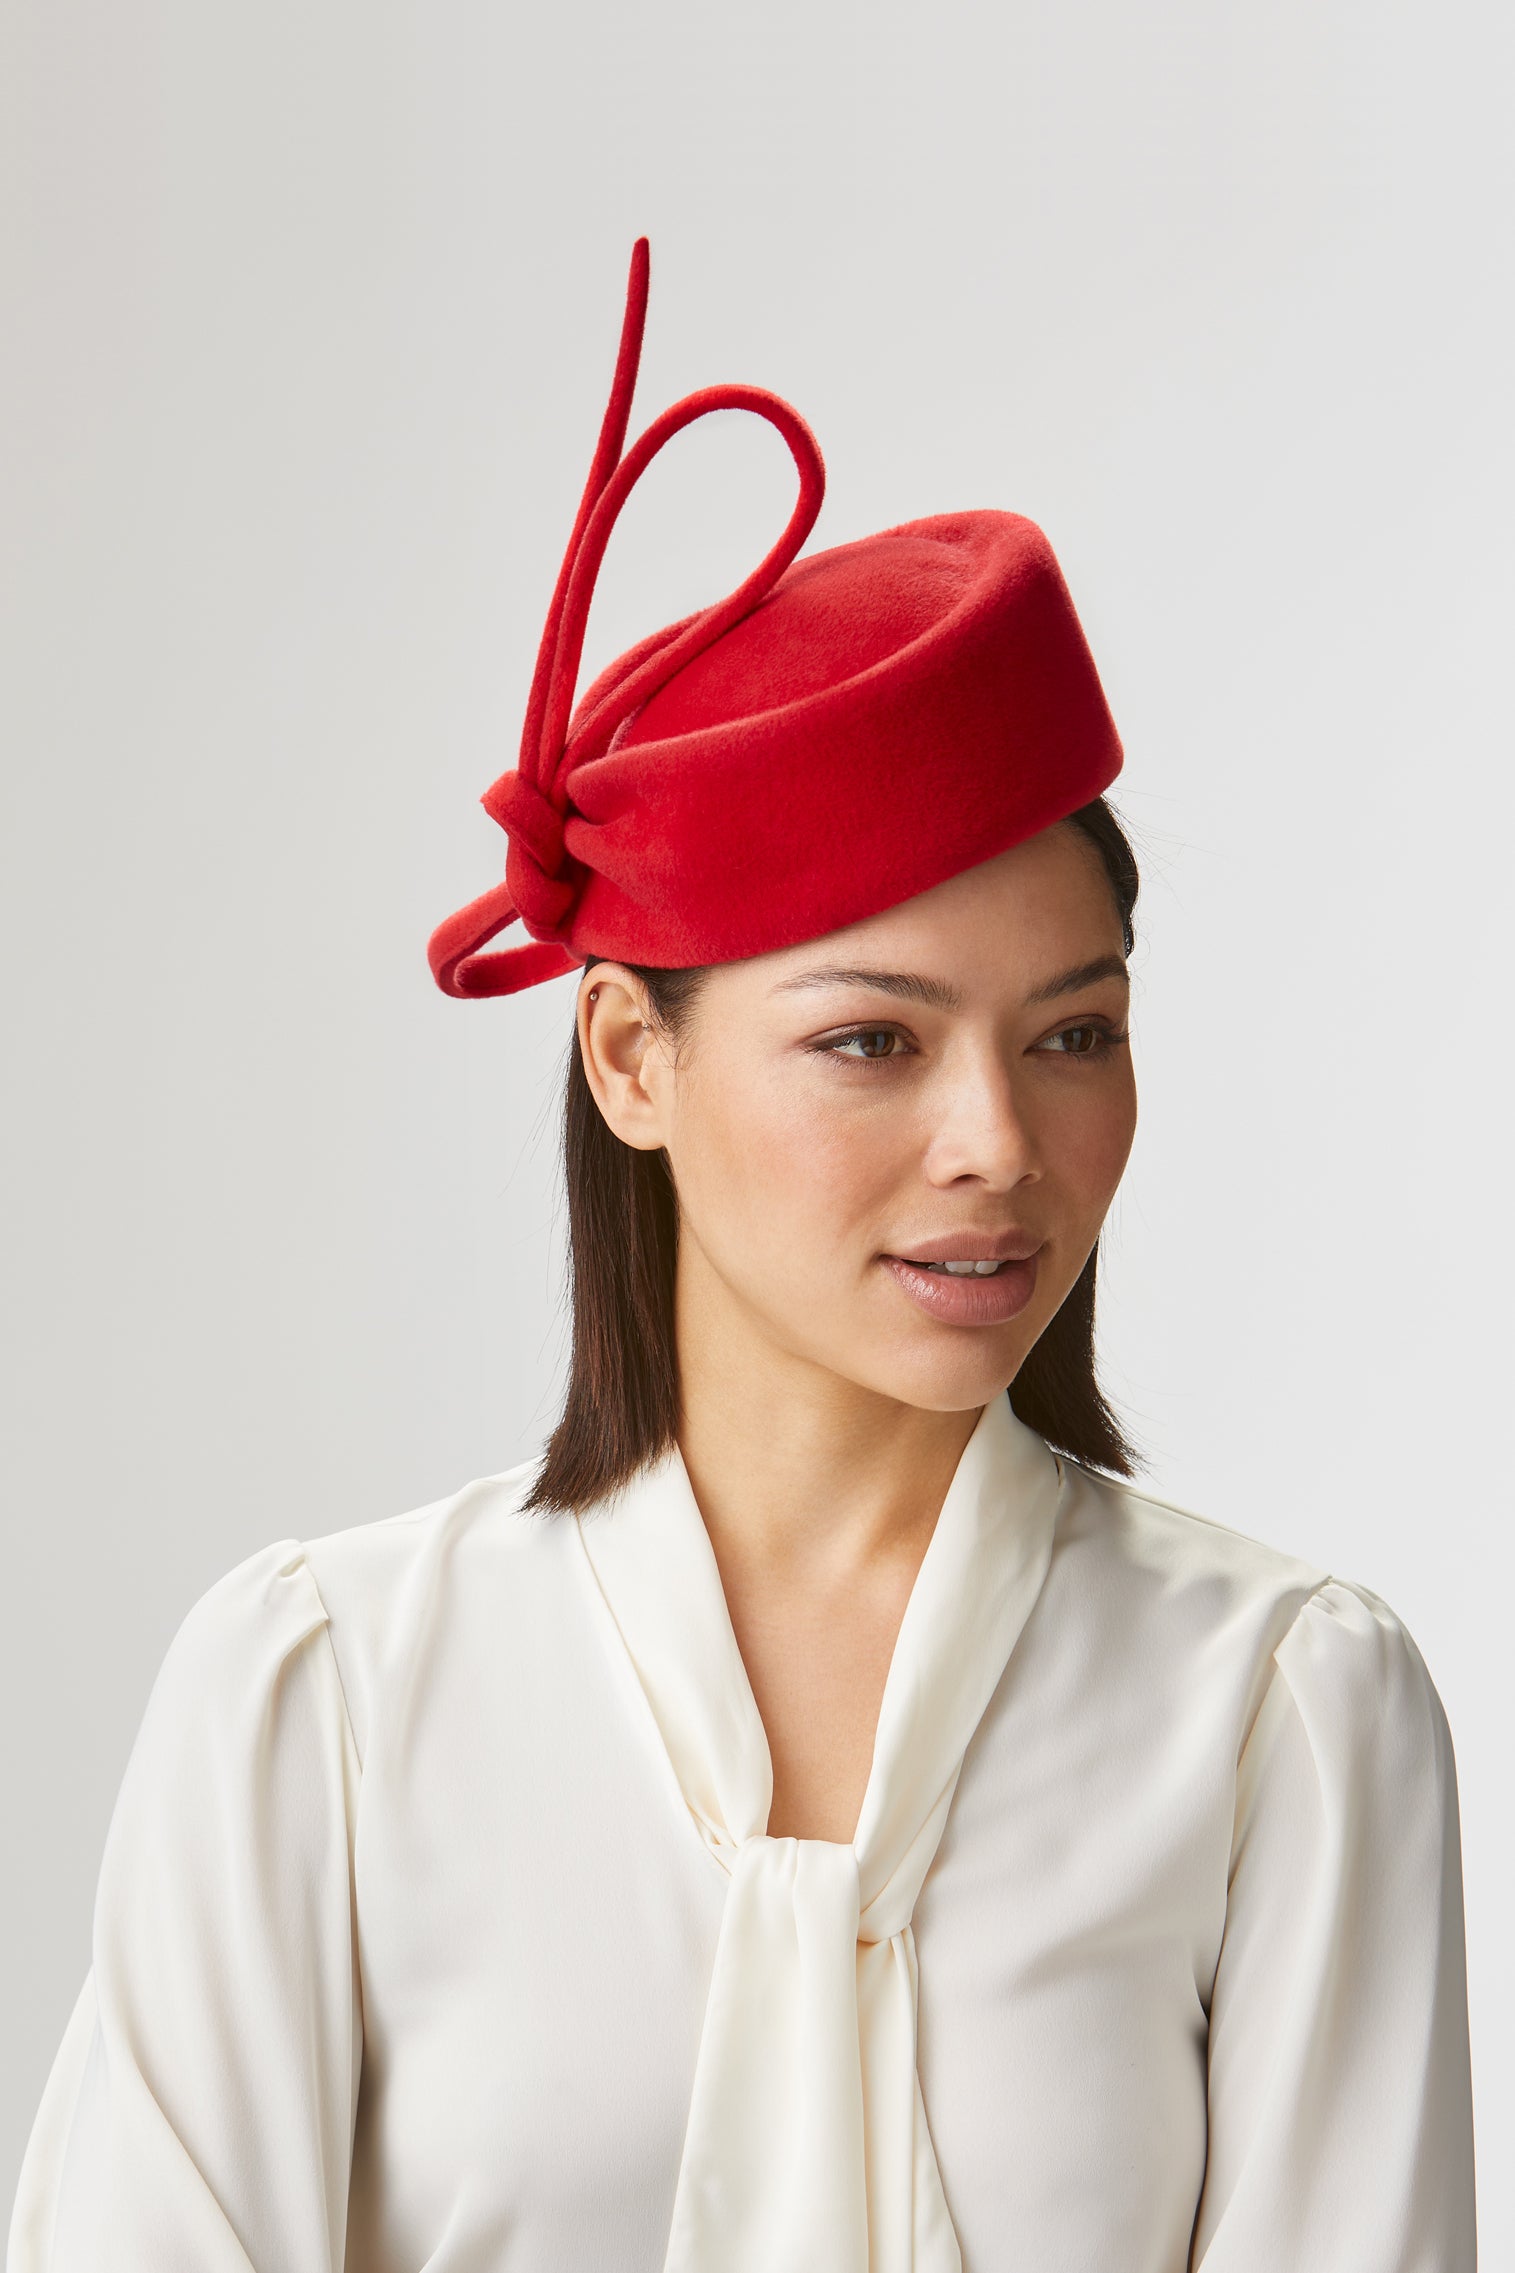 Mayfair Red Pillbox Hat - Pillbox Hats for Women - Lock & Co. Hatters London UK